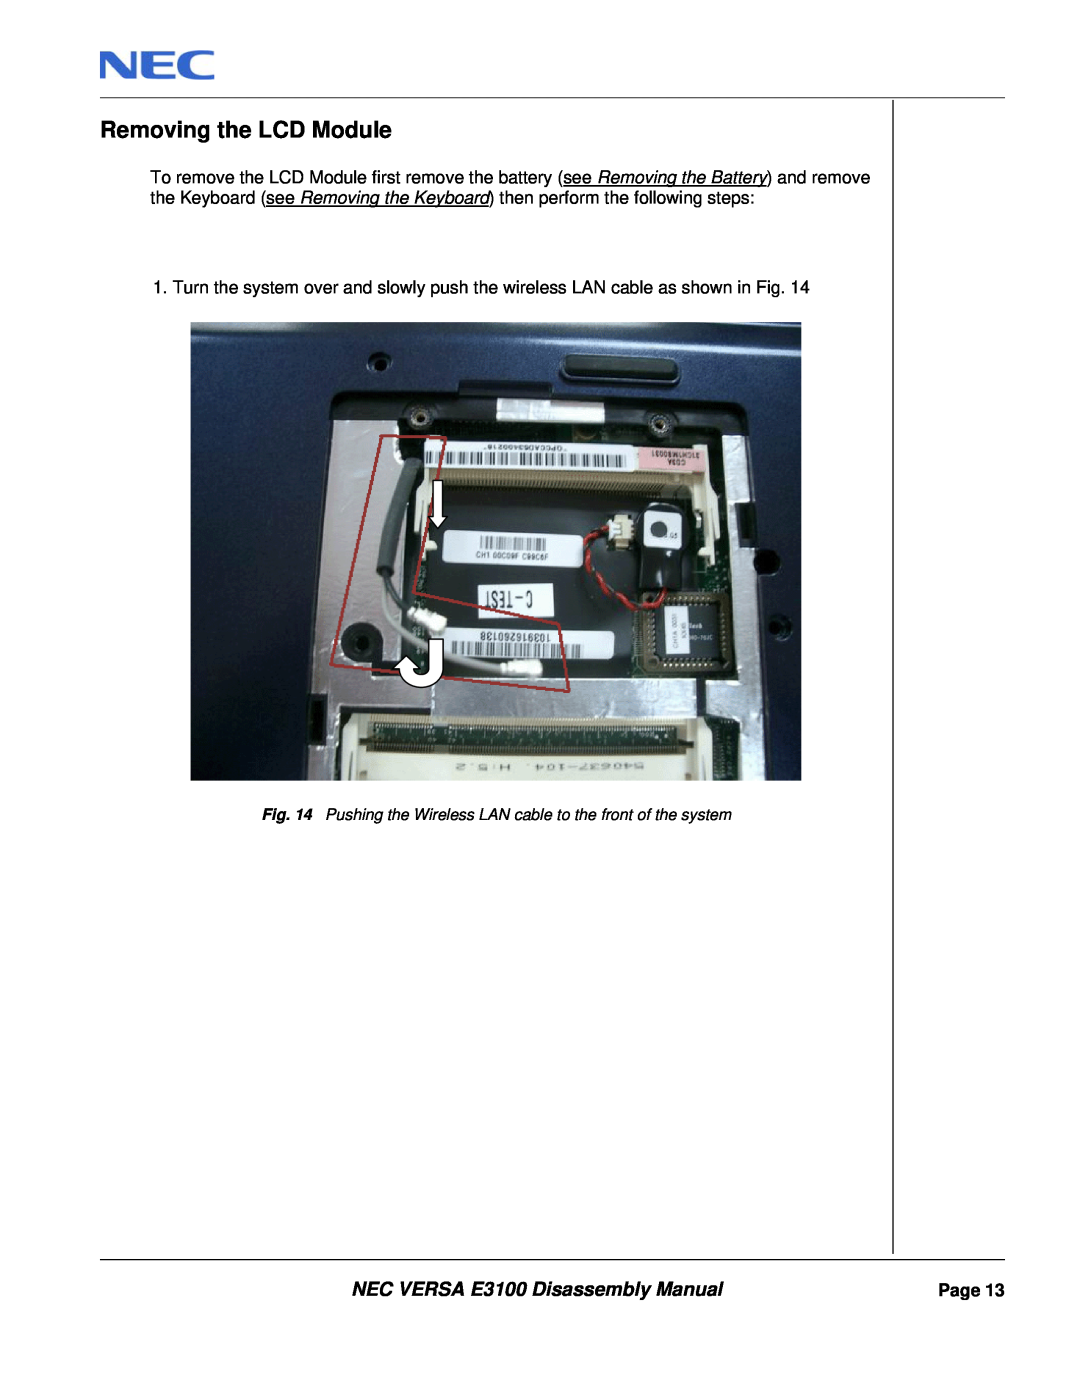 NEC manual Removing the LCD Module, NEC VERSA E3100 Disassembly Manual 